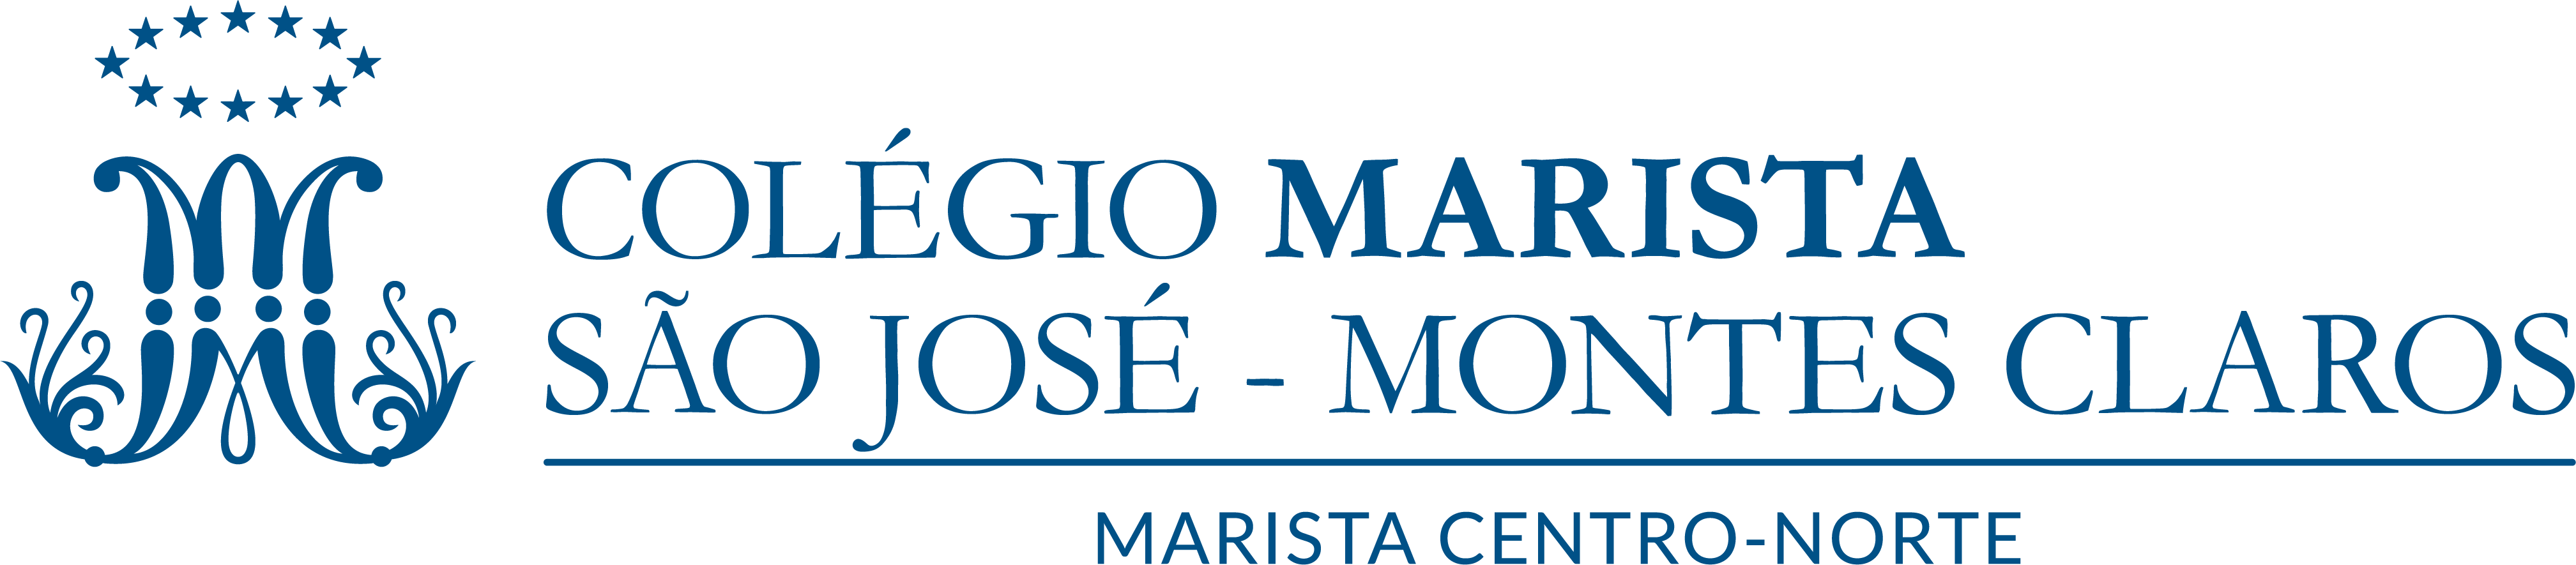  Colégio Marista São José - Montes Claros